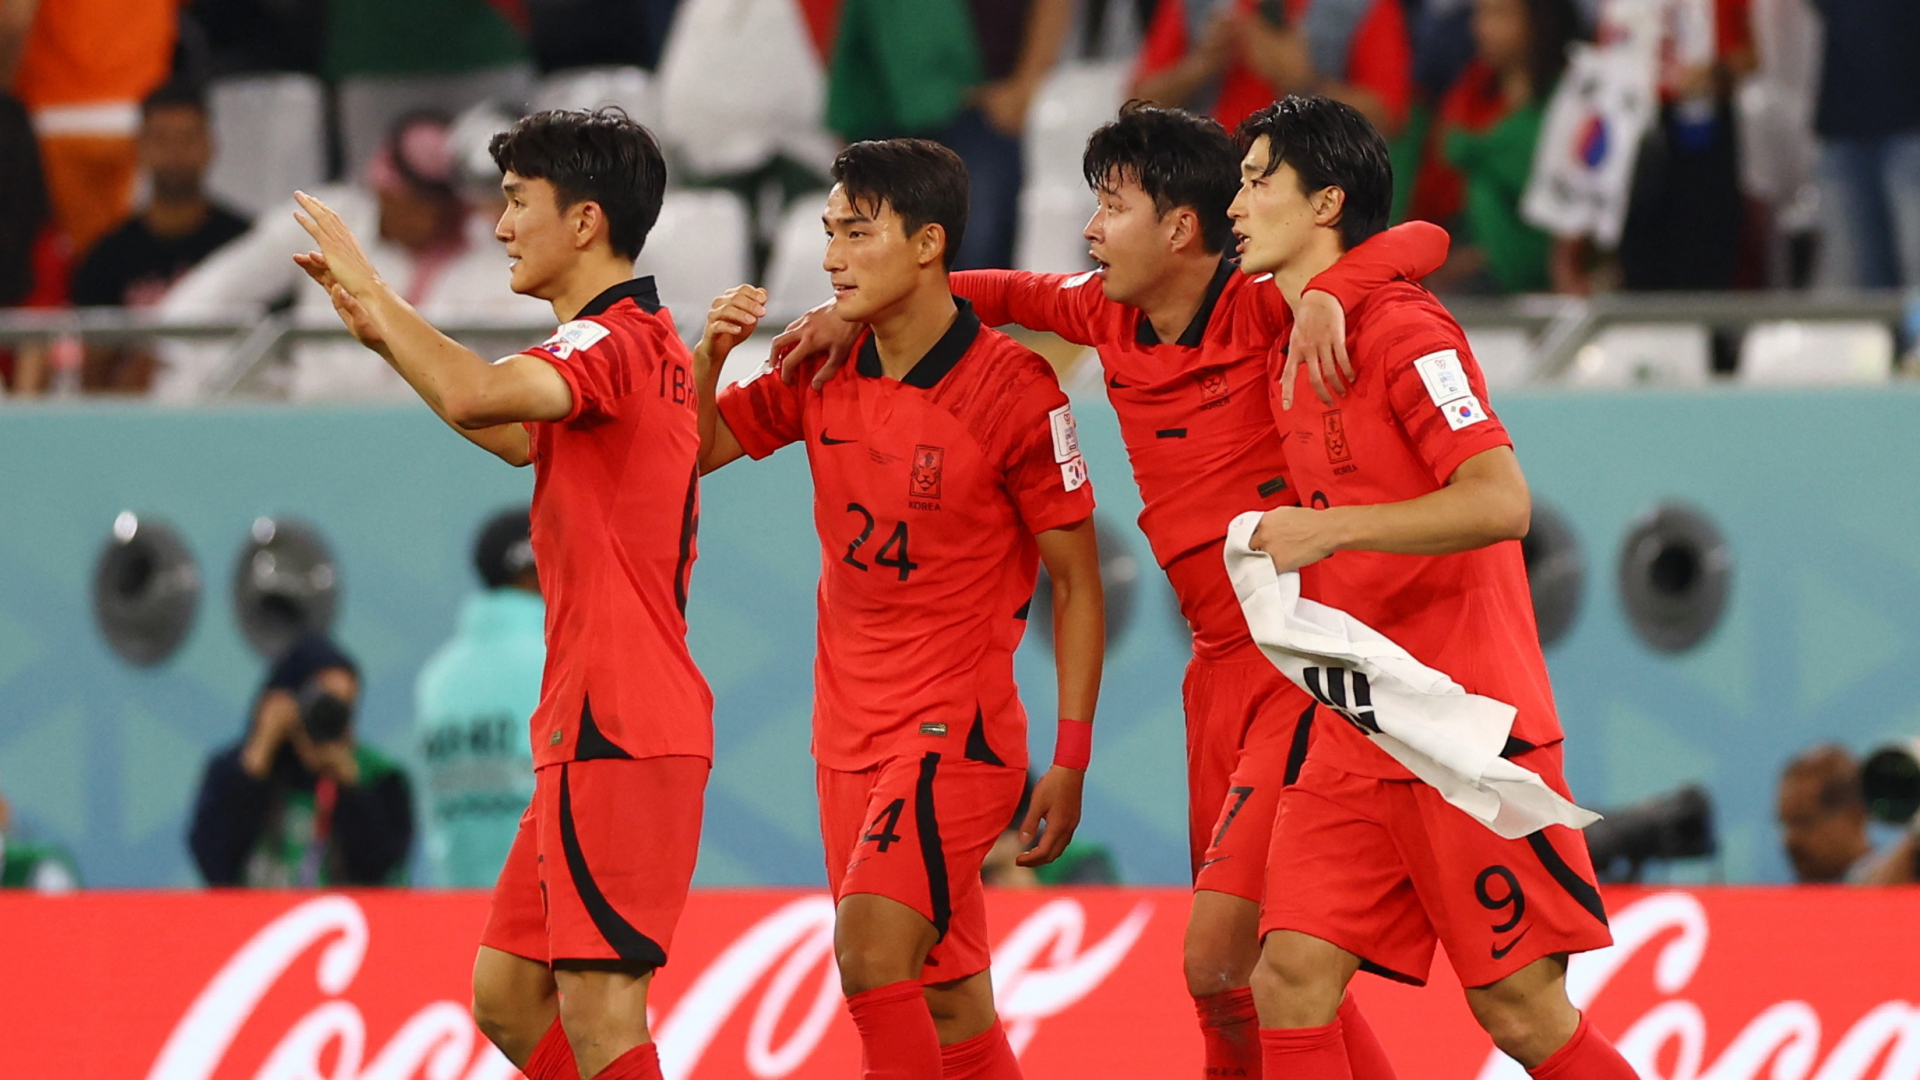 Spieler der südkoreanischen Mannschaft jubeln | REUTERS